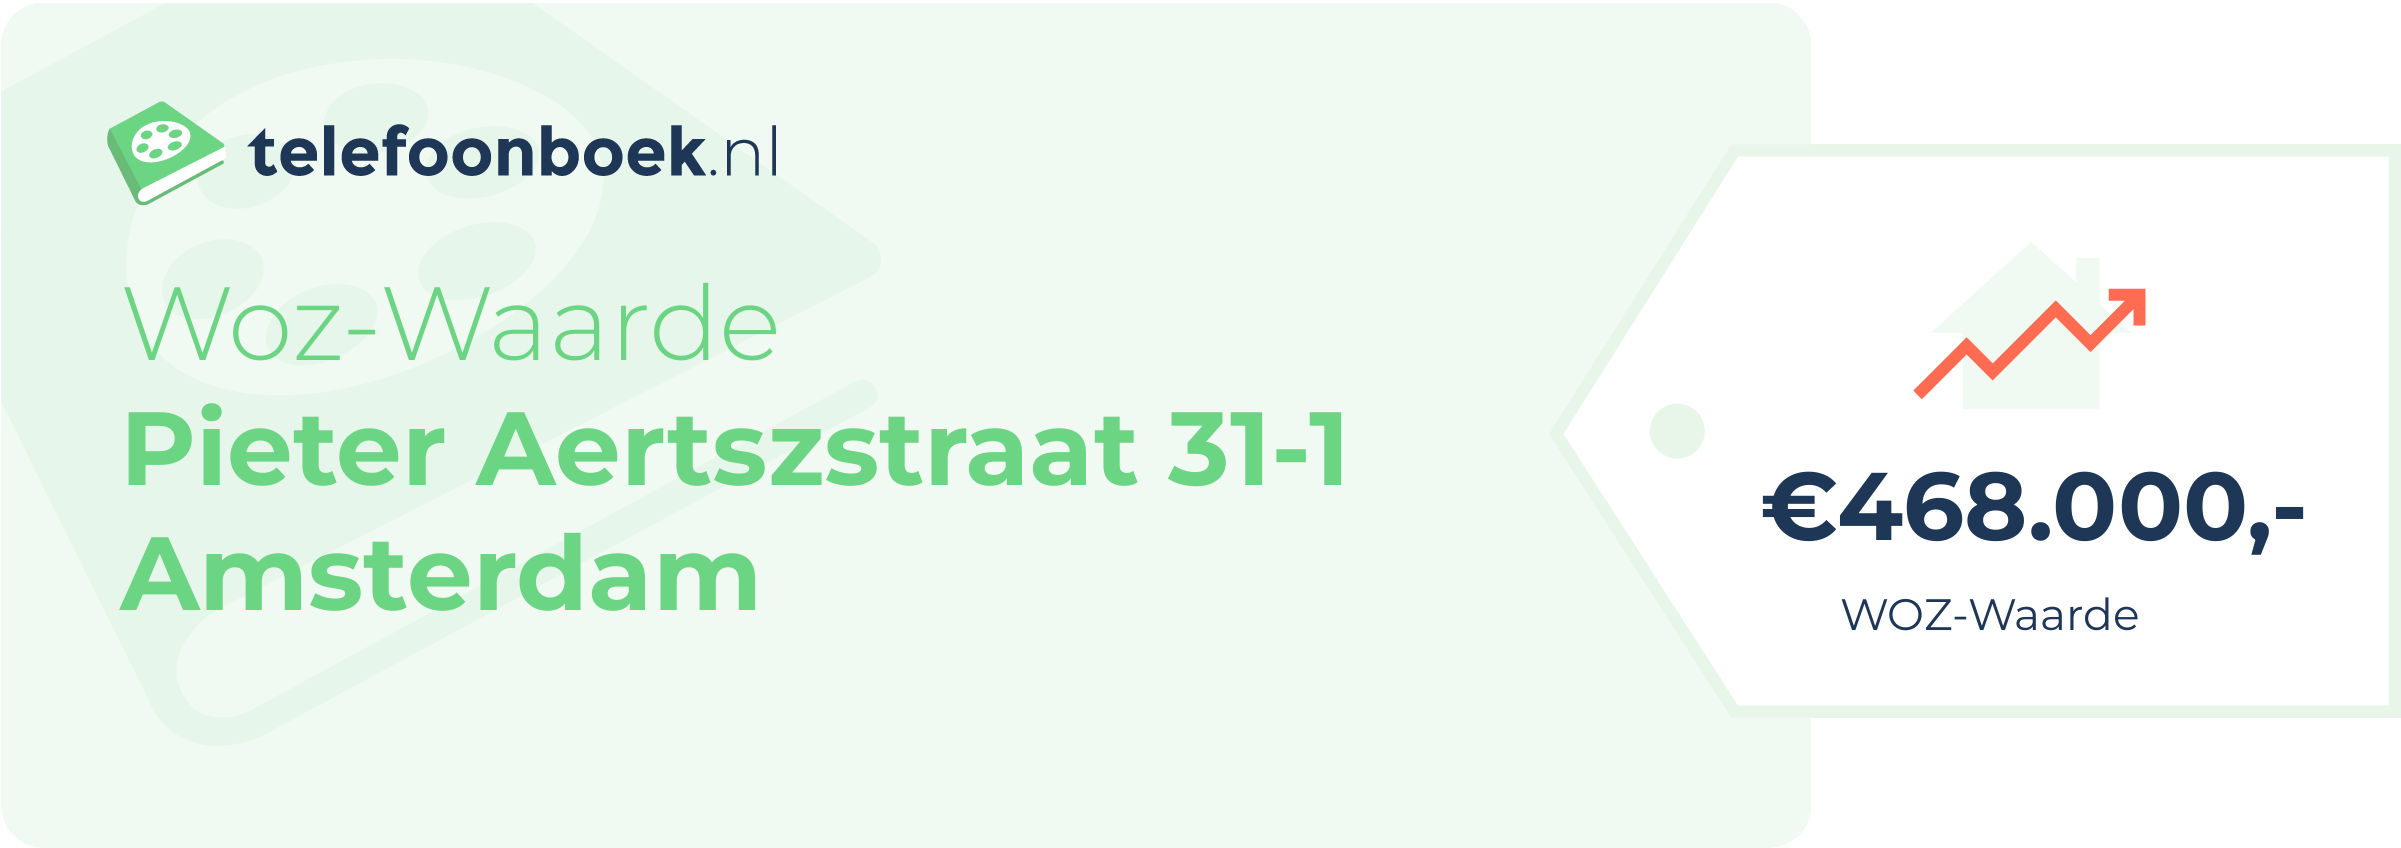 WOZ-waarde Pieter Aertszstraat 31-1 Amsterdam